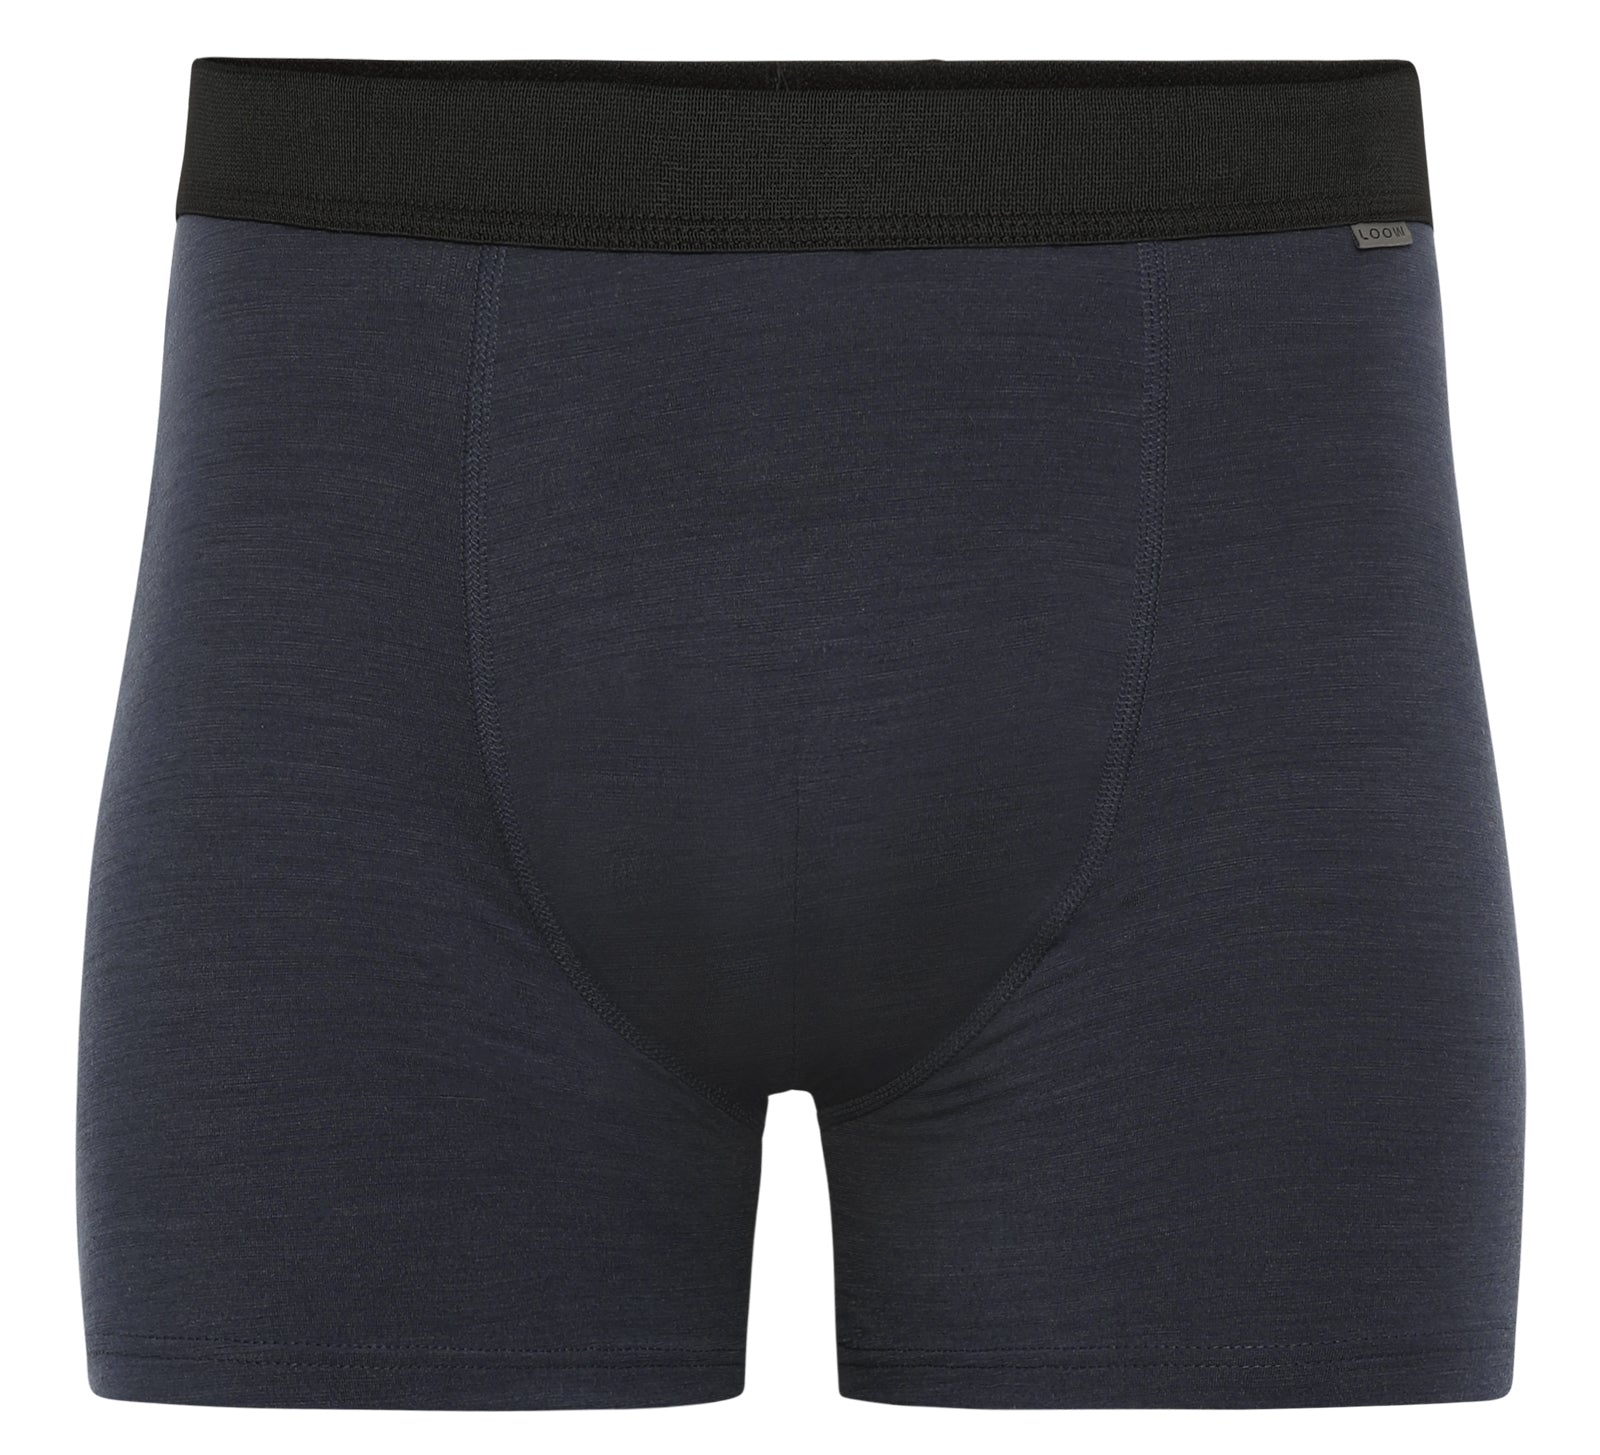 Mens boxers, merino/silk - High quality elastic, Danish fabrics. – LOOW